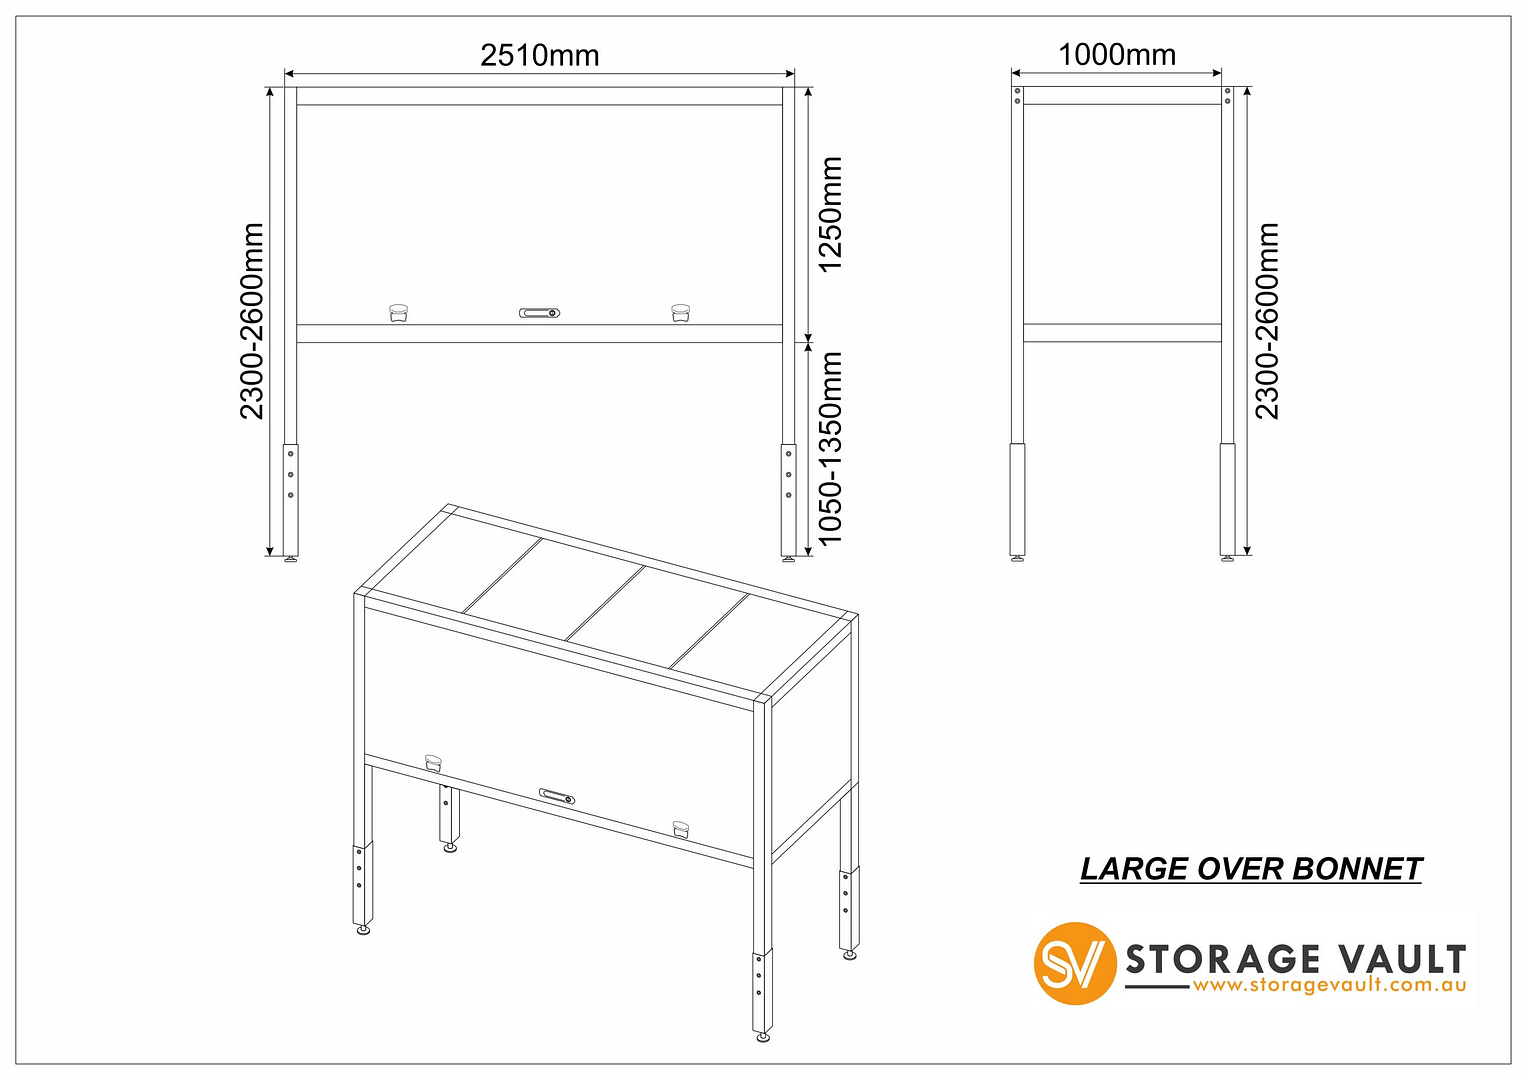 small over bonnet storage box dimensions diagram